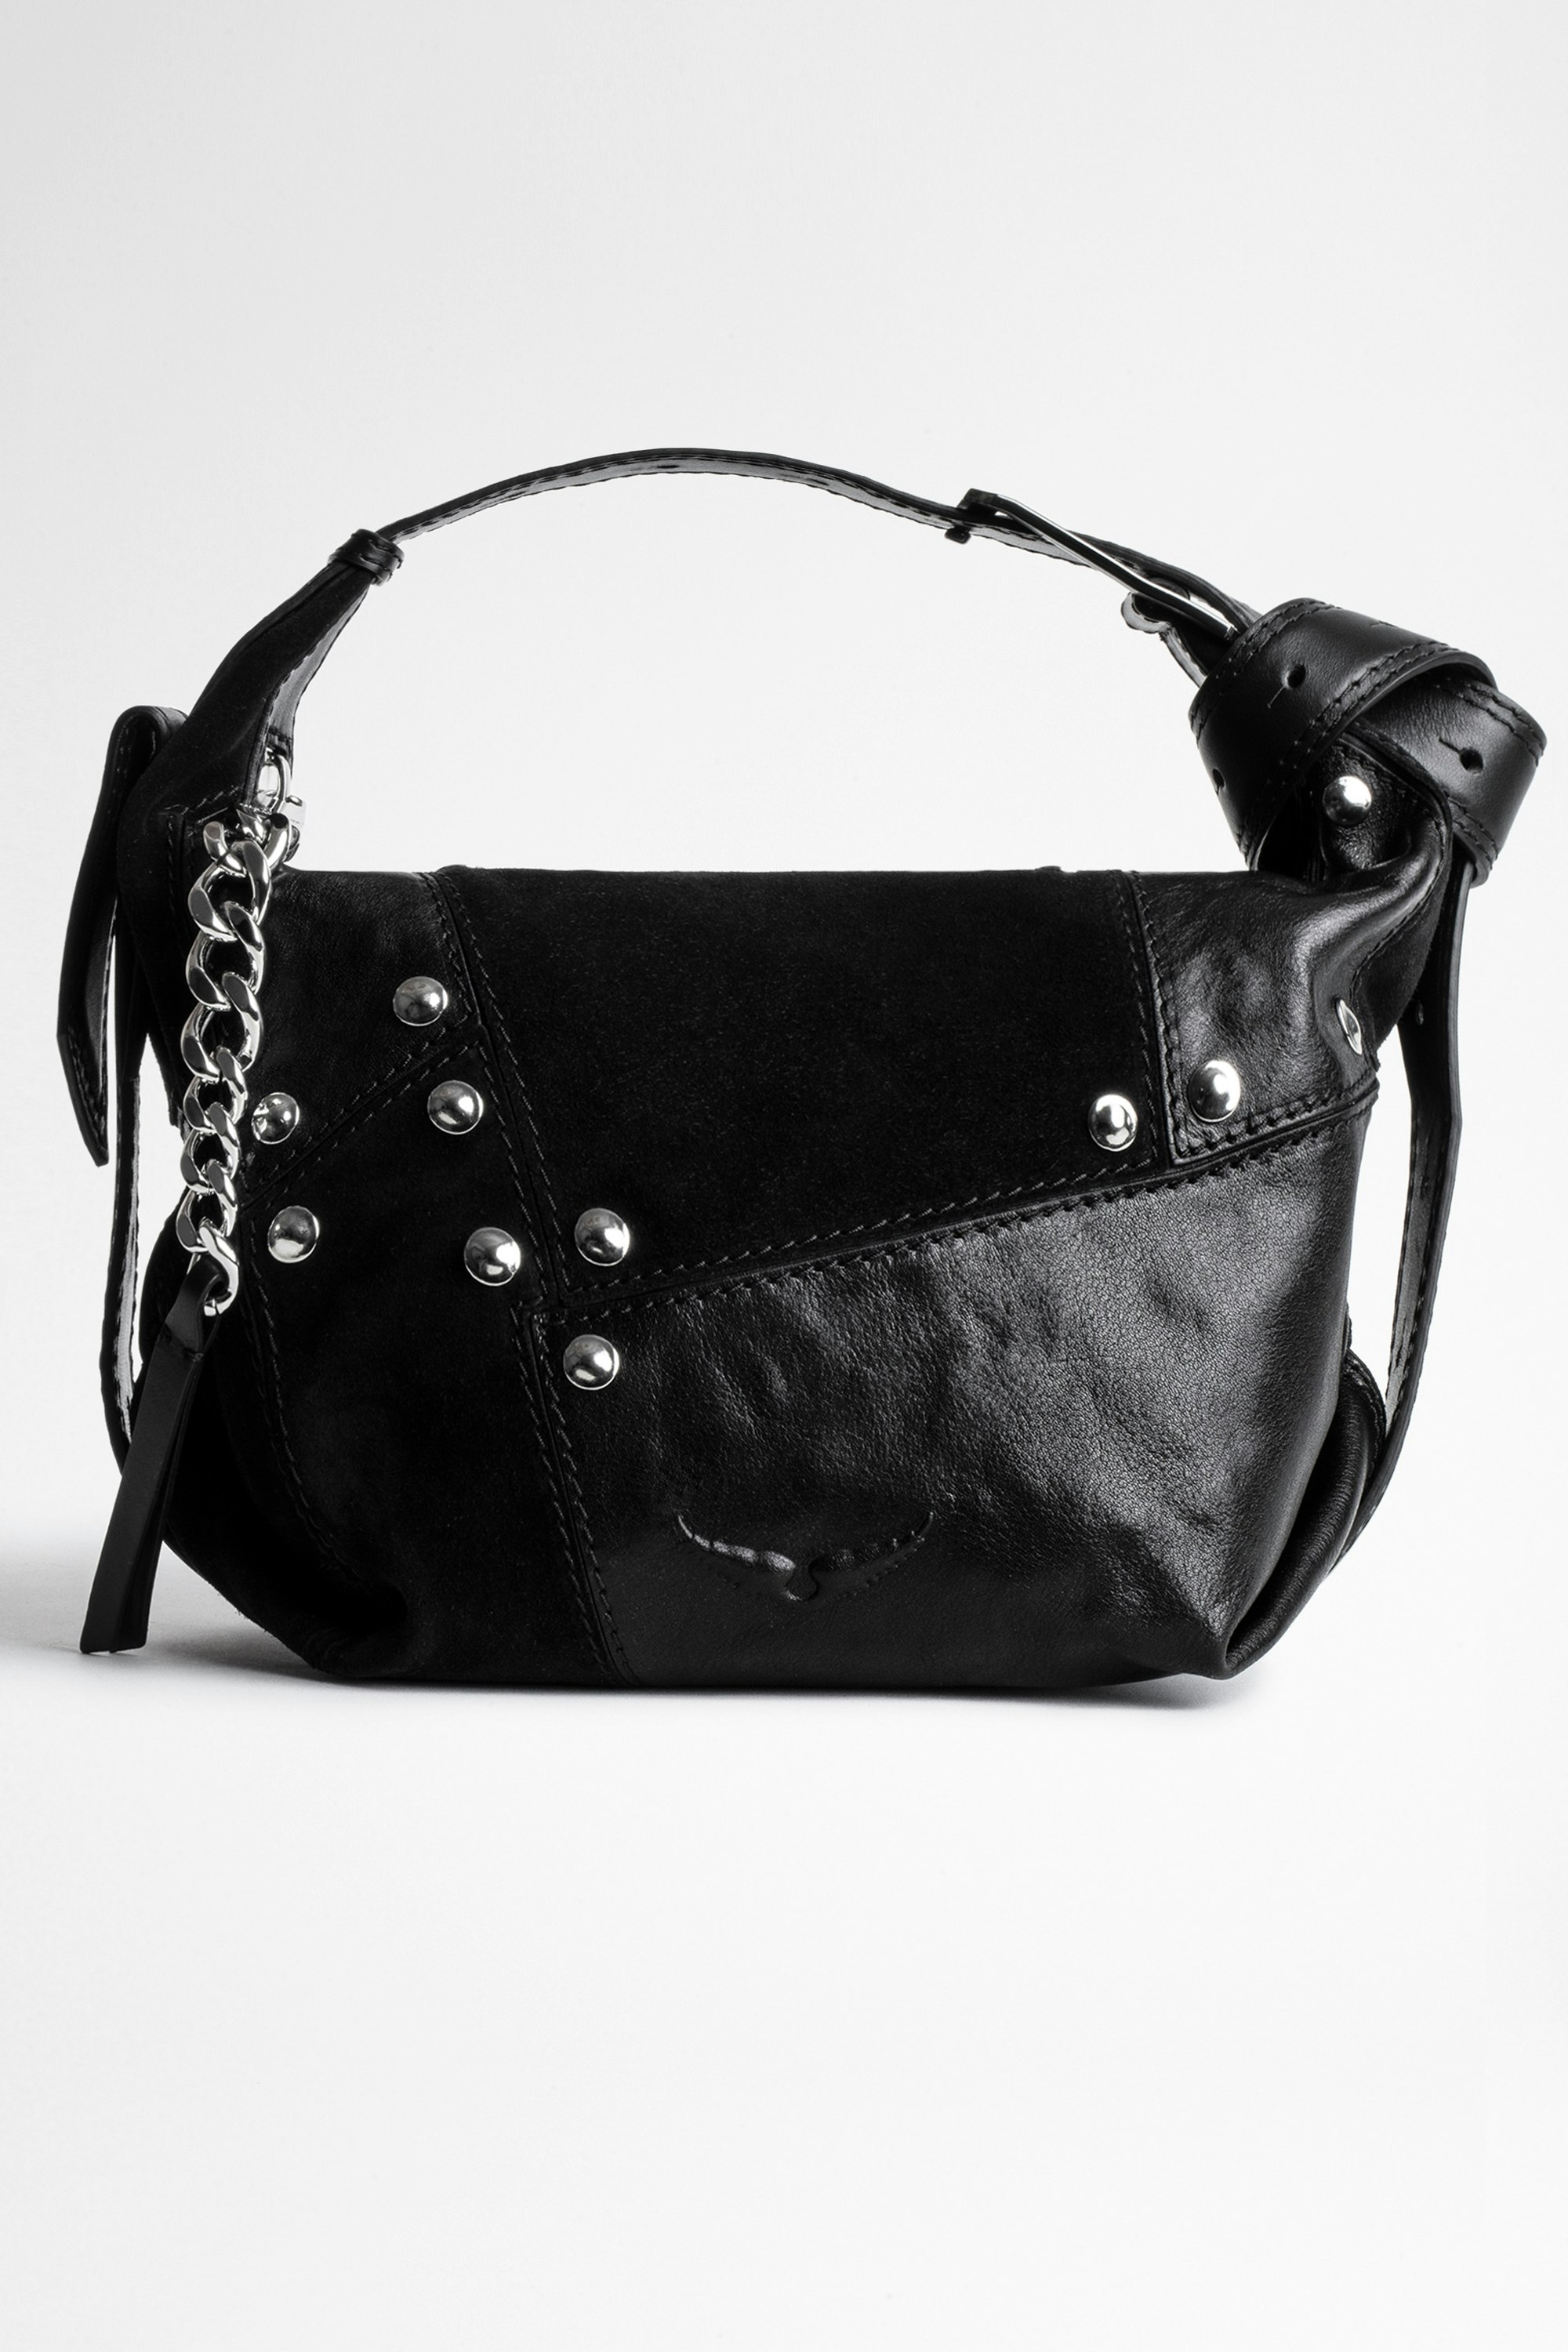 Le Cecilia Patchwork バッグ Women’s Le Cecilia black patchwork leather bag